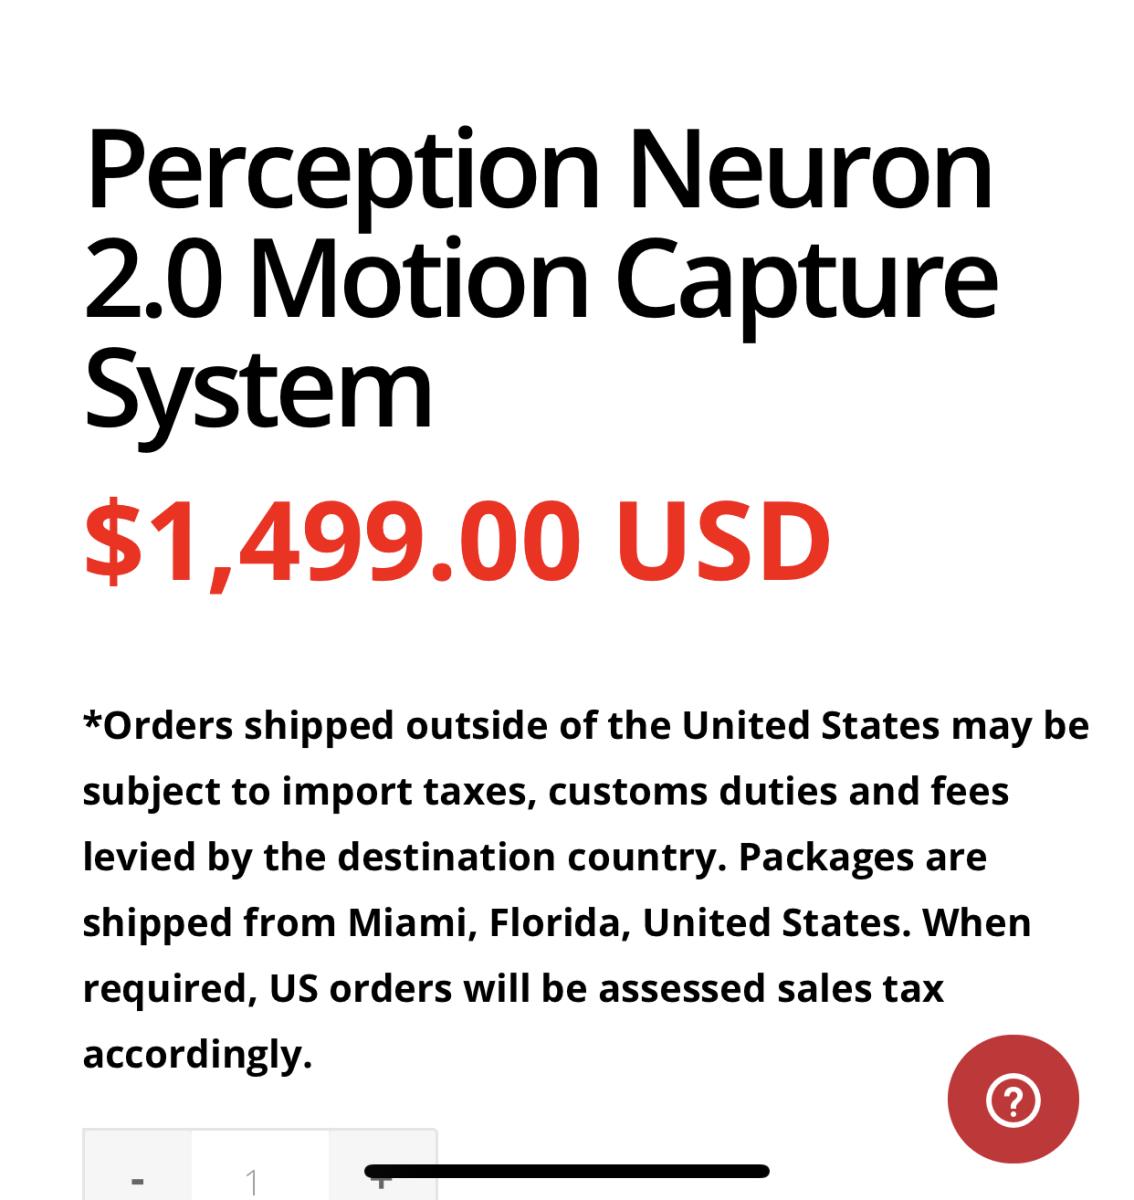 perception neuron iclone 7